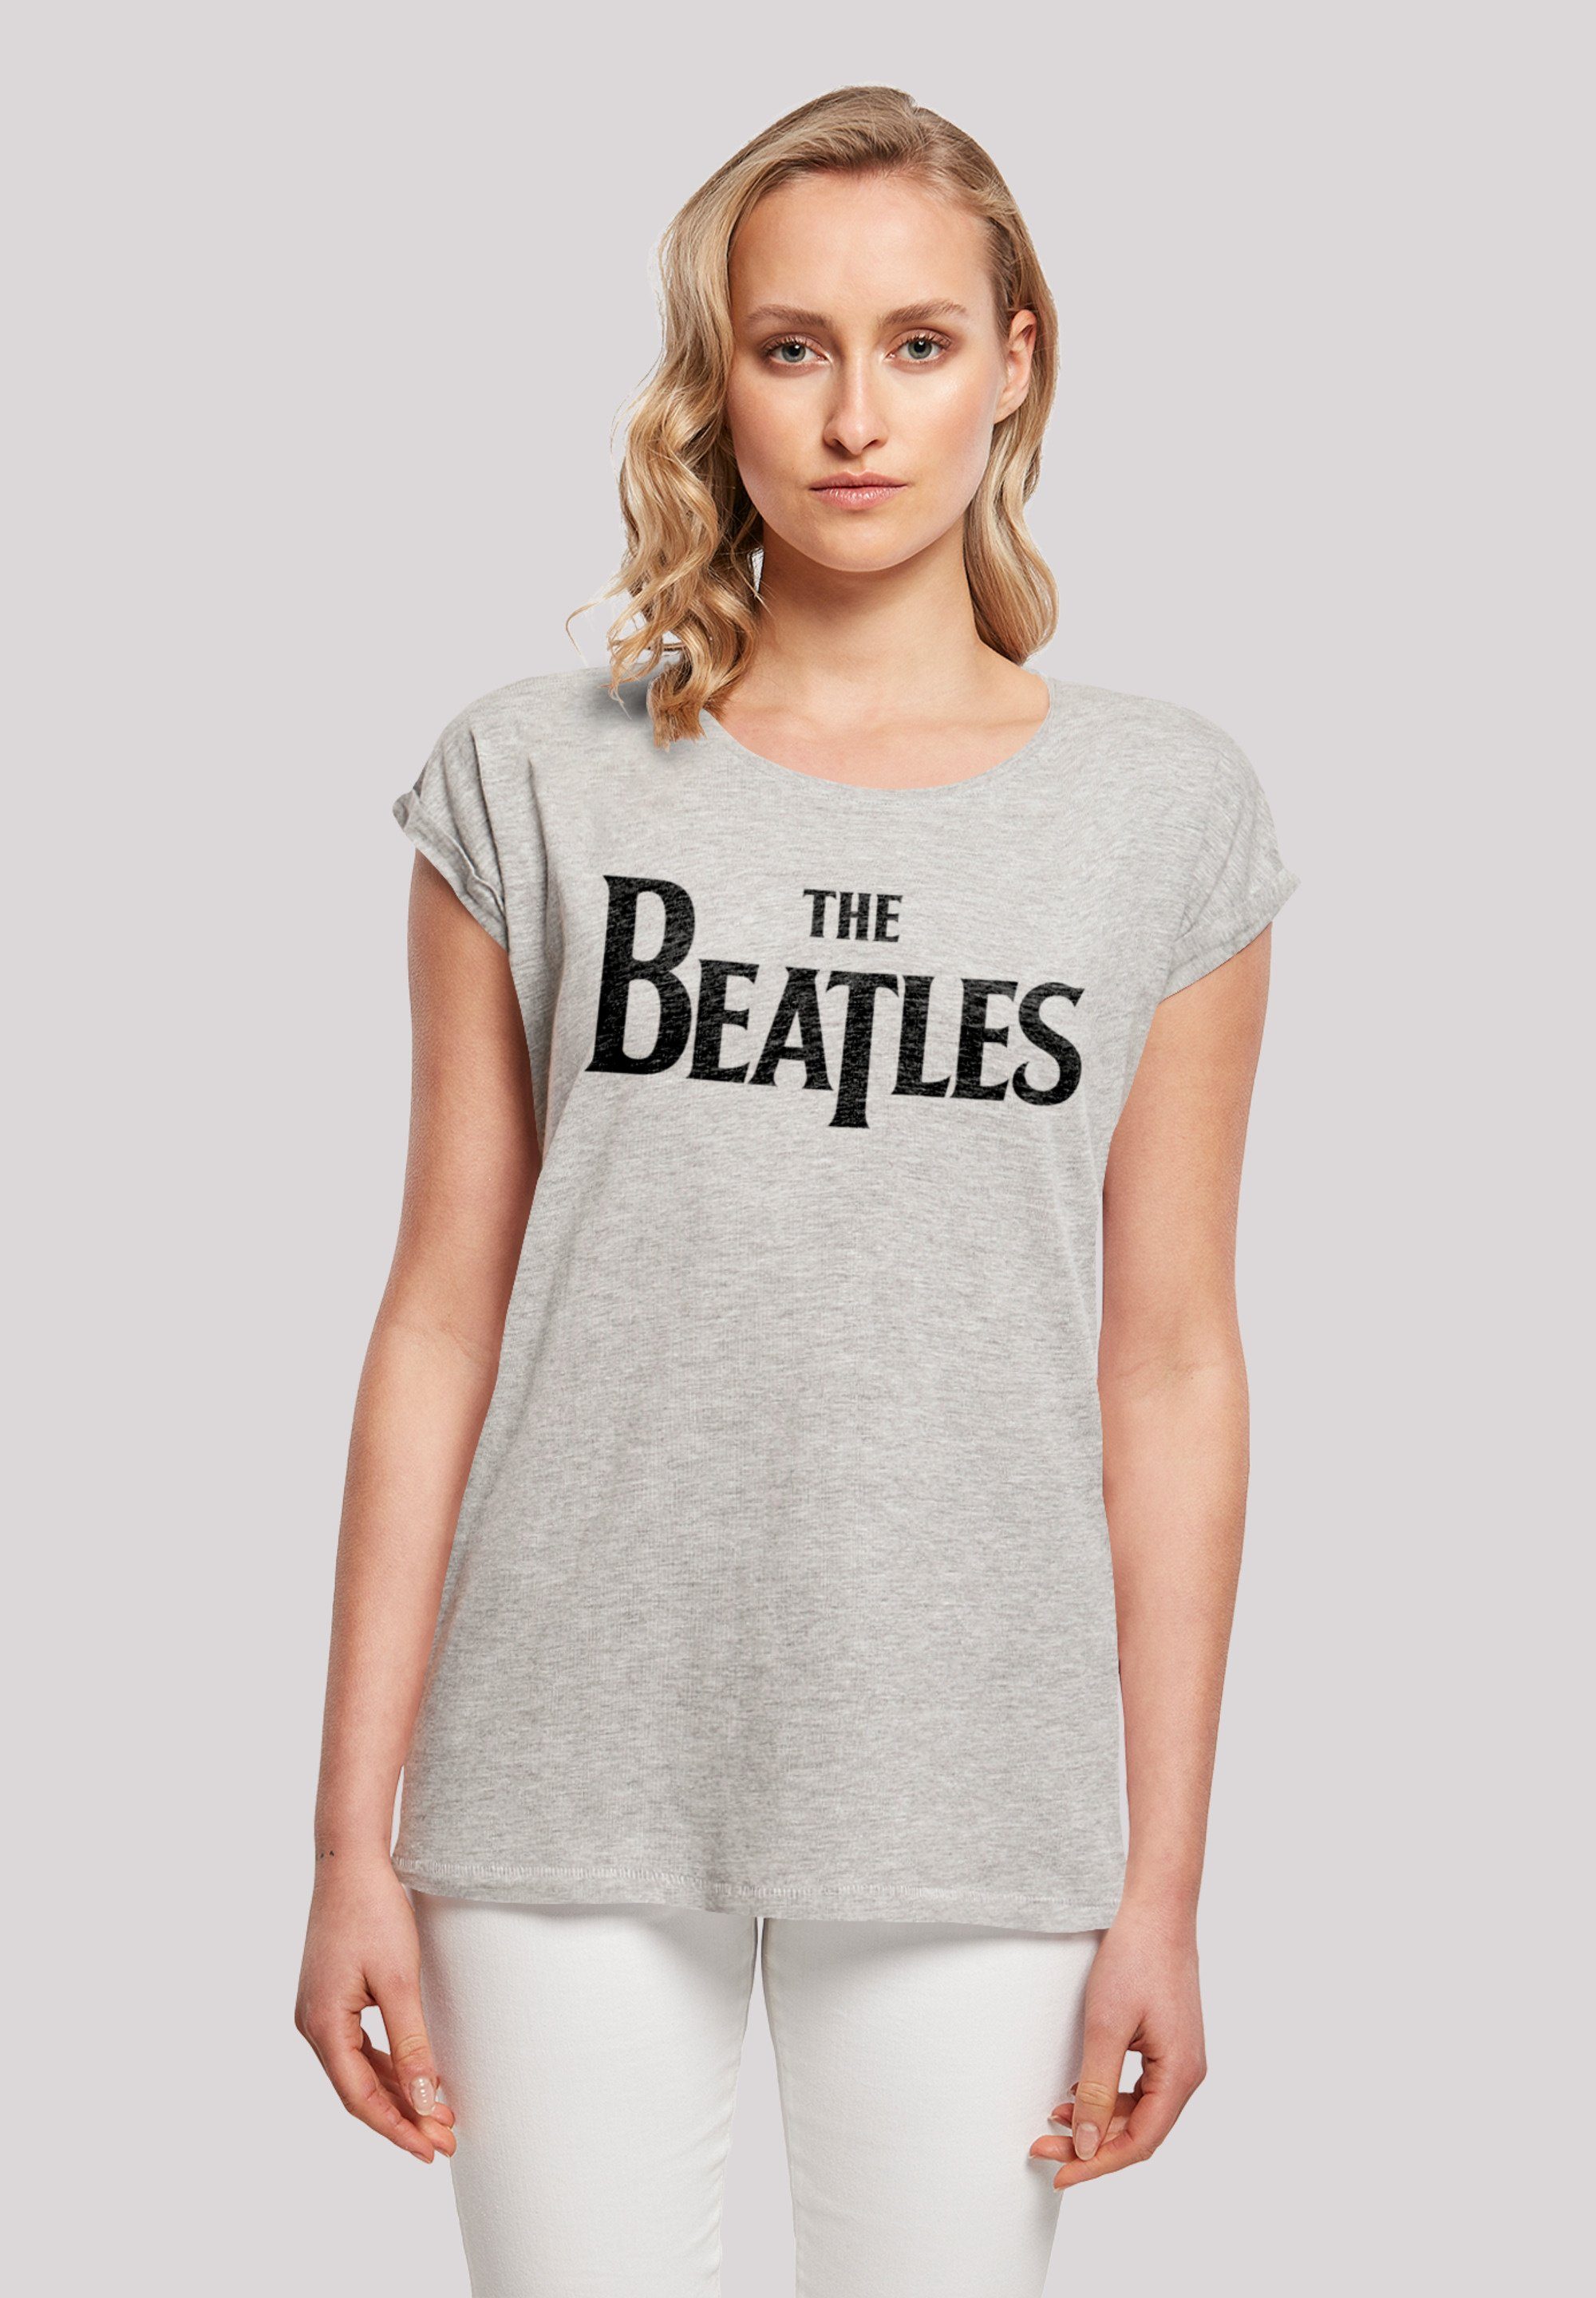 F4NT4STIC T-Shirt The Beatles Band 170 T Logo groß cm Größe trägt Print, Black und M ist Model Drop Das